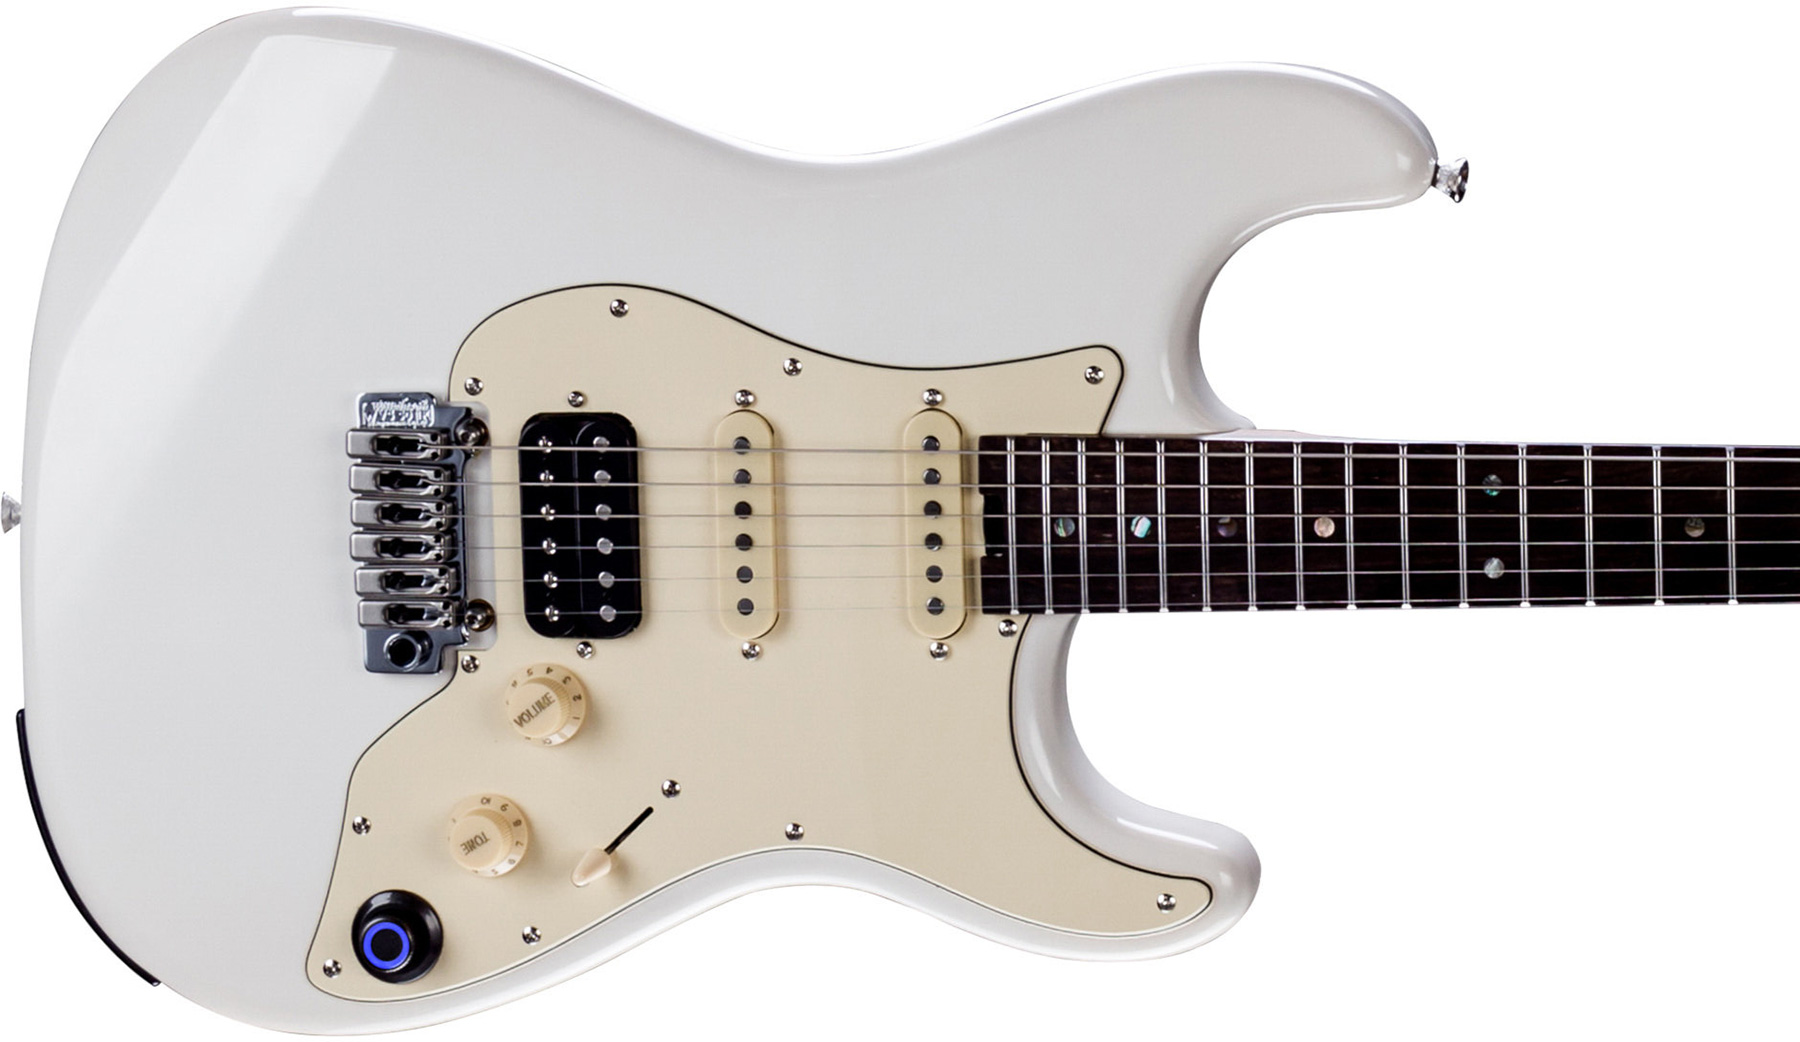 Mooer Gtrs P800 Pro Intelligent Guitar Hss Trem Rw - Olympic White - Modeling guitar - Variation 2